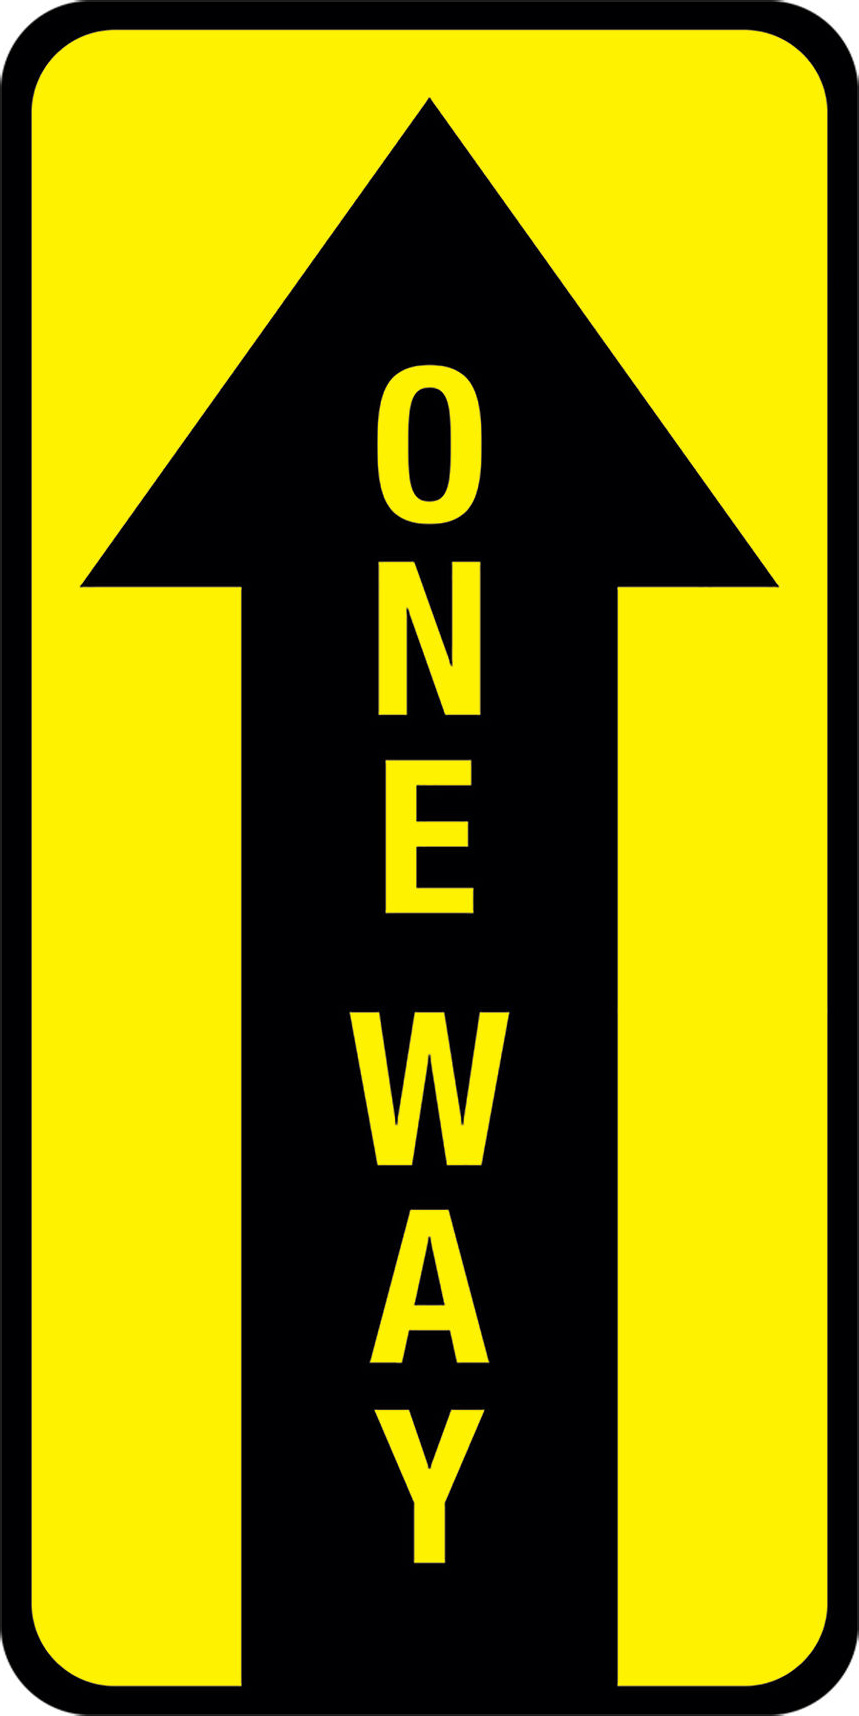 One Way Floor Decal - 6 x 12 inch